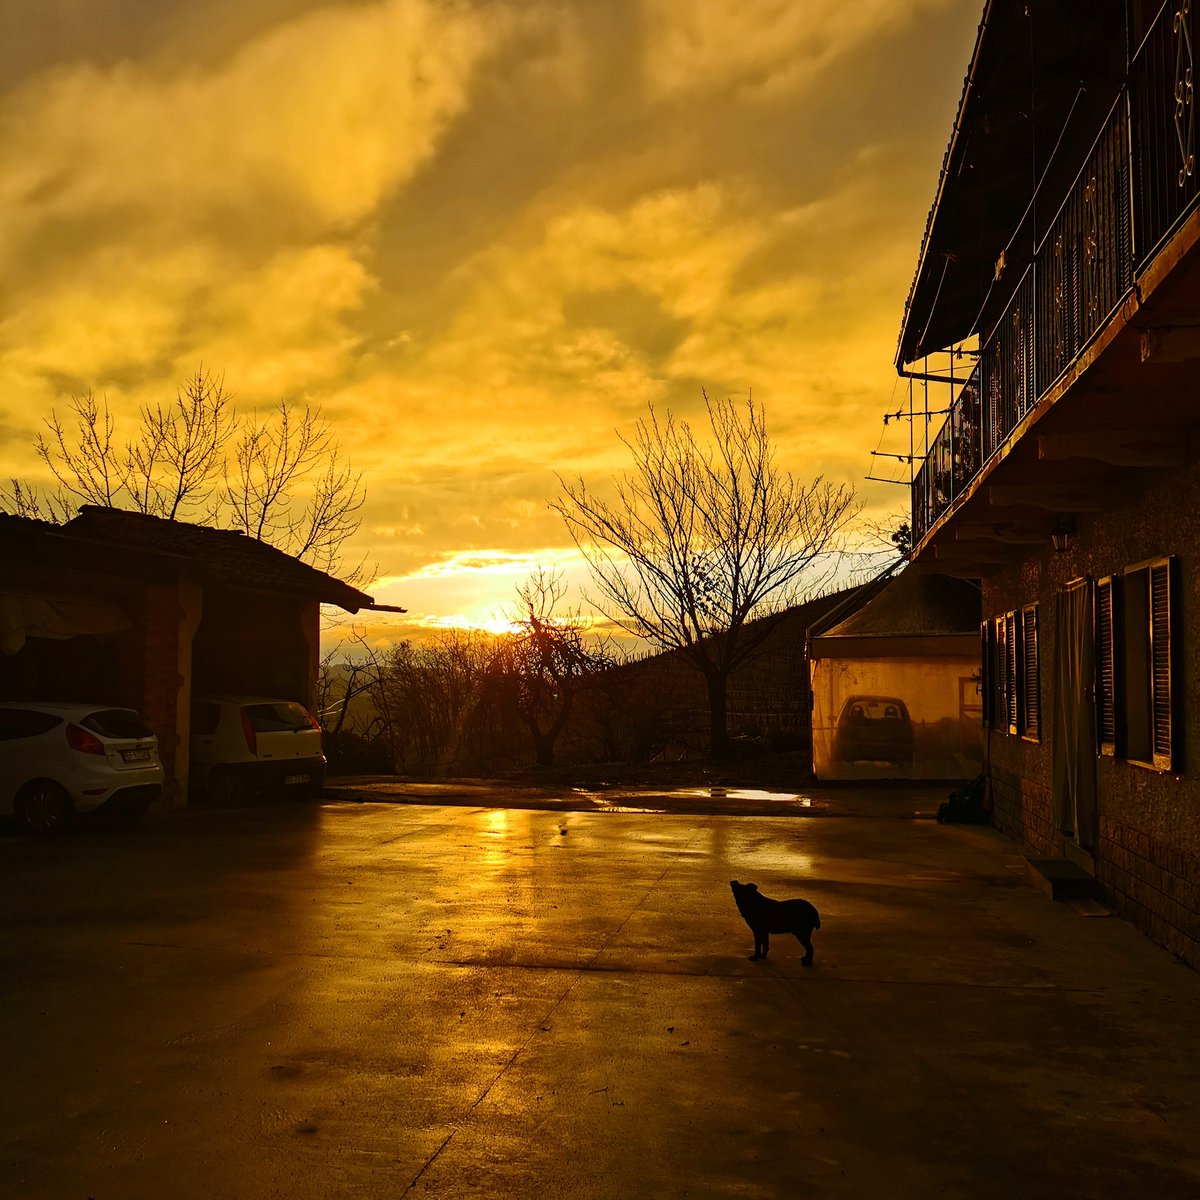 Sunset natural whit Buzz #black #dog #instalanghetti #ig_cuneo #ig_piemonte #volgocuneo #volgopiemonte #tabuiapp #sunset #langhe #nofilter #cool #sunday #wine #dianodalba #february